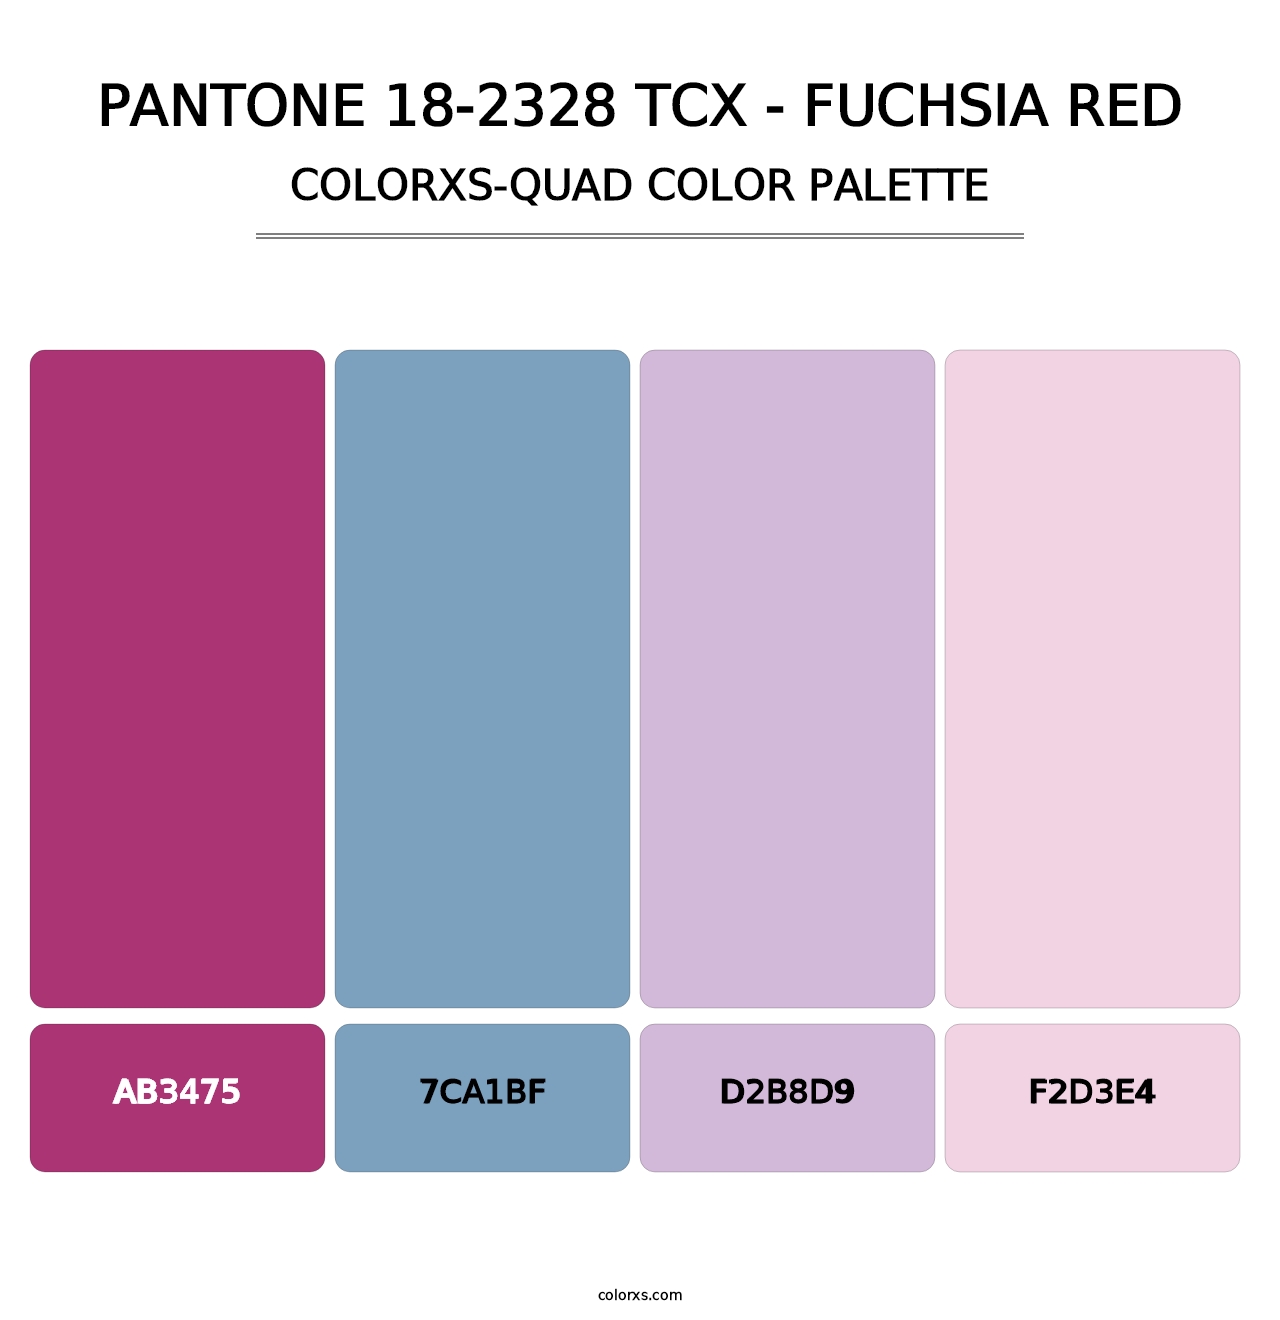 PANTONE 18-2328 TCX - Fuchsia Red - Colorxs Quad Palette